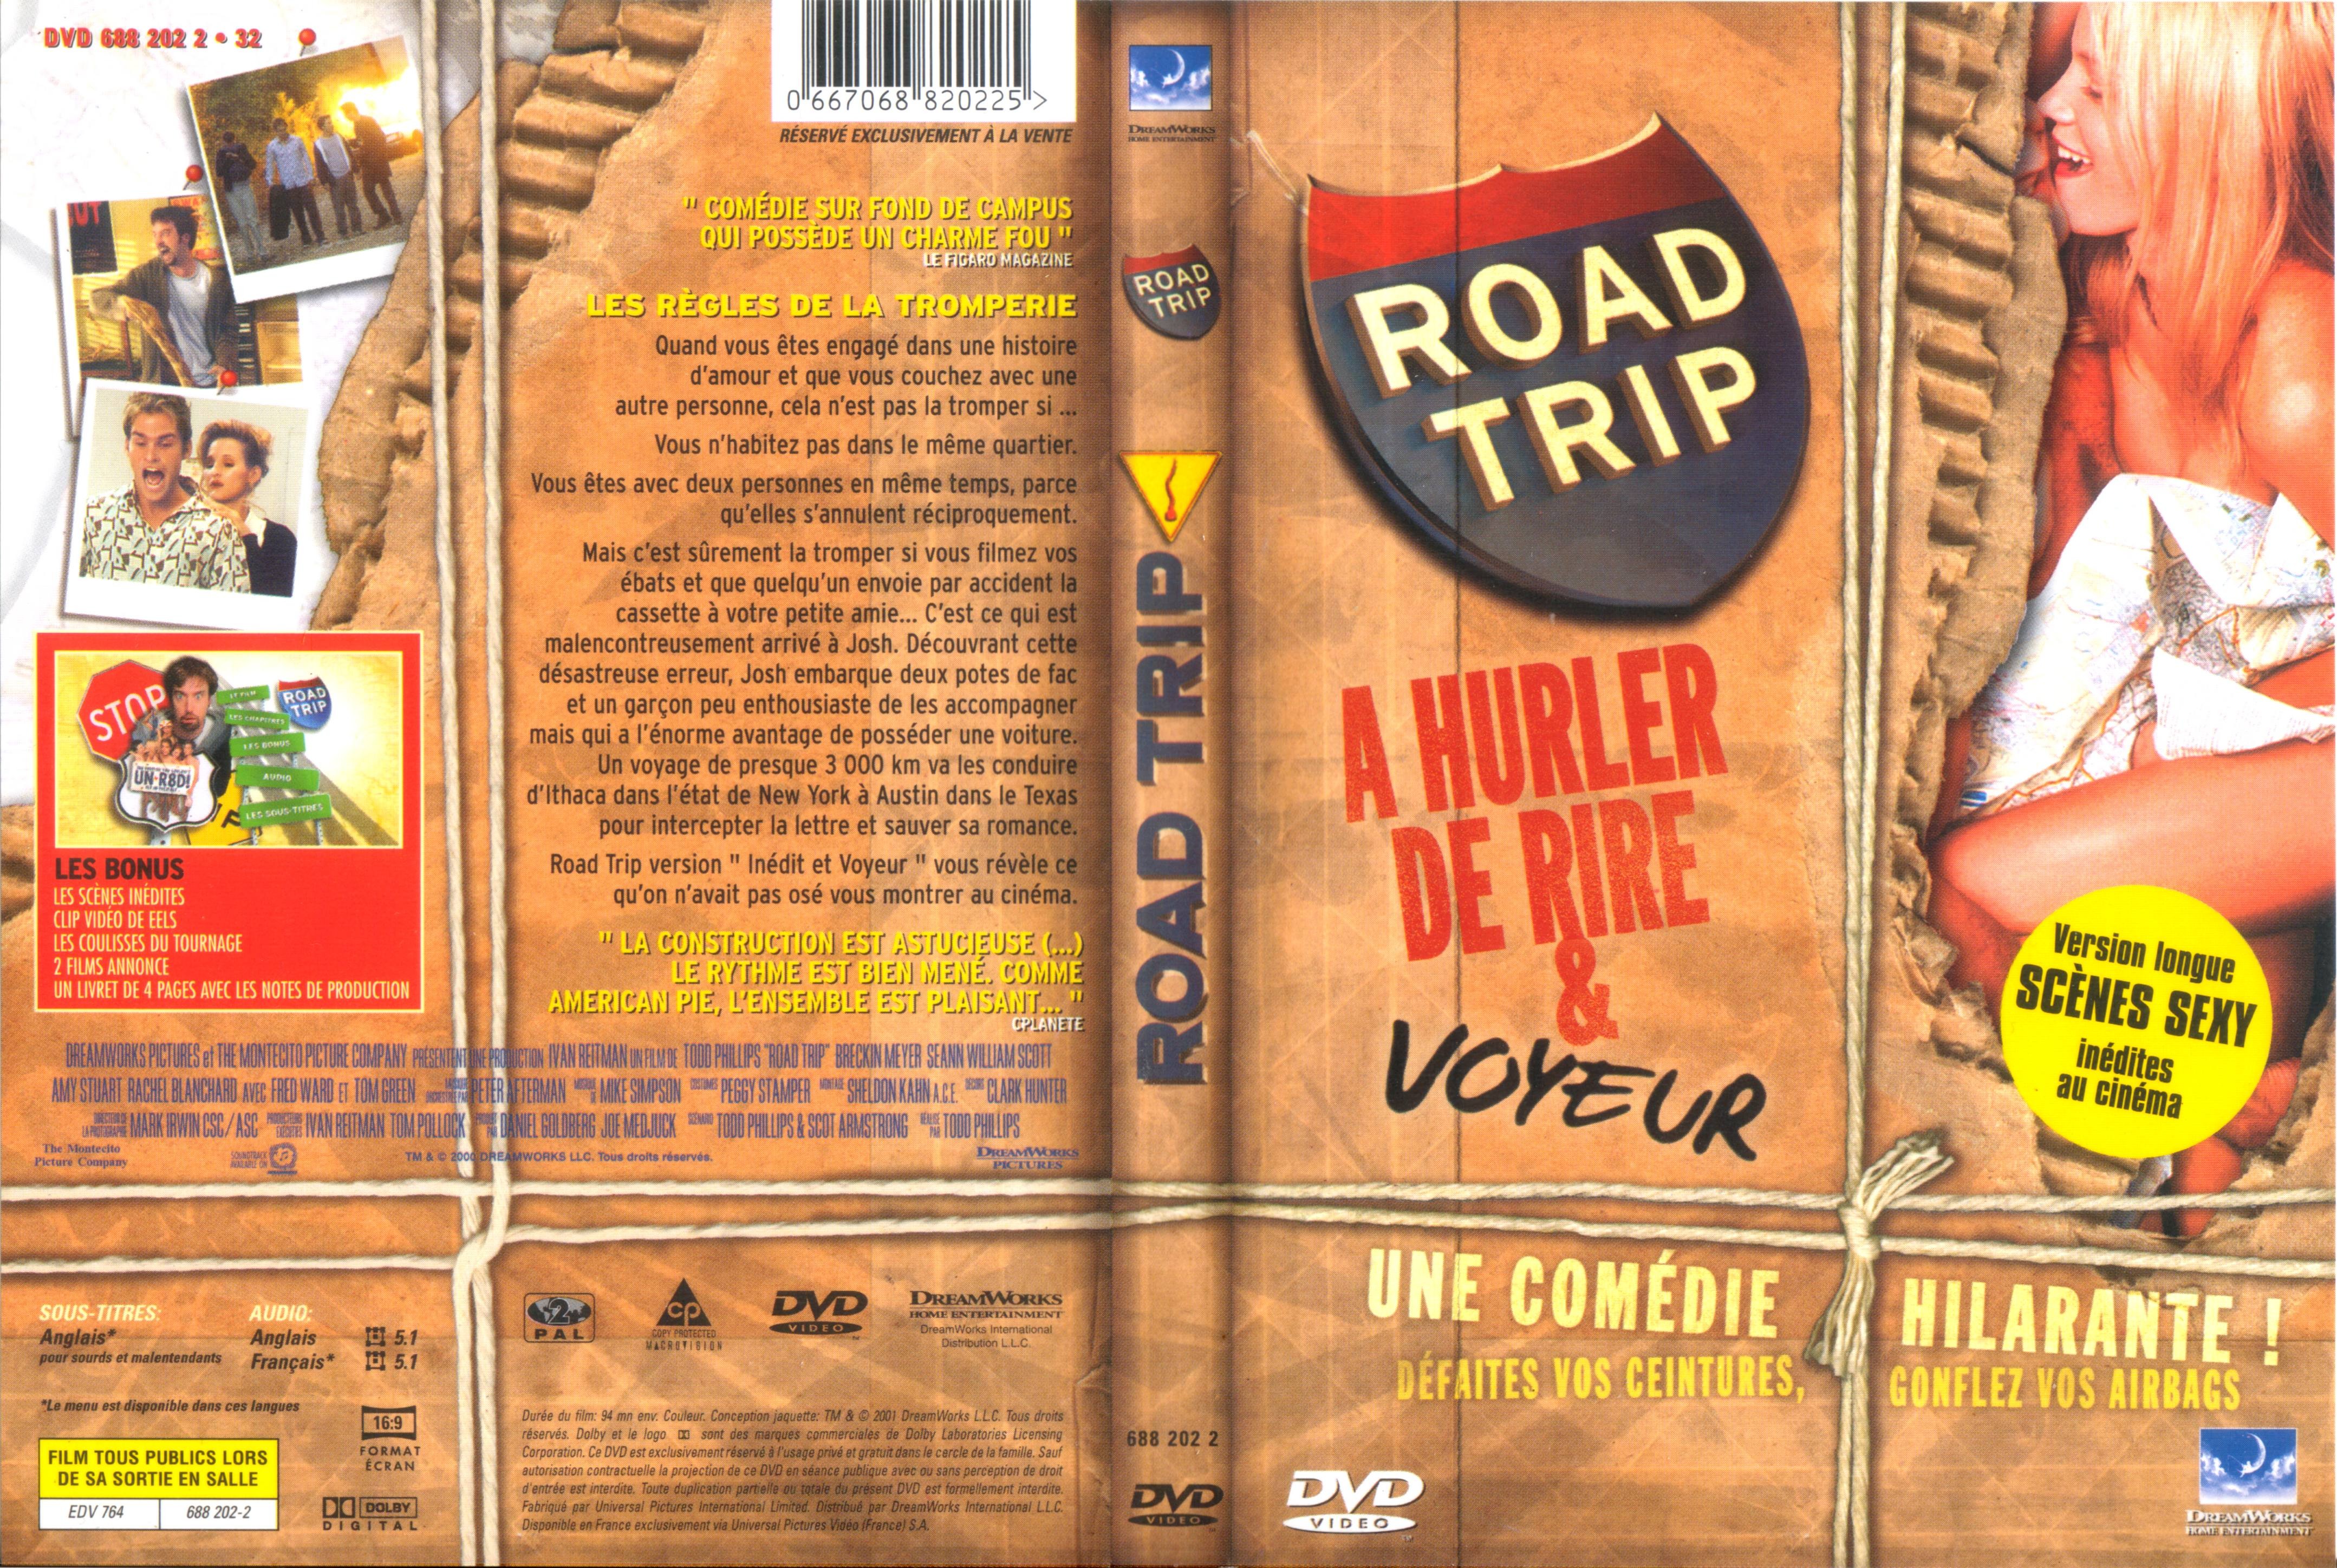 Jaquette DVD Road trip